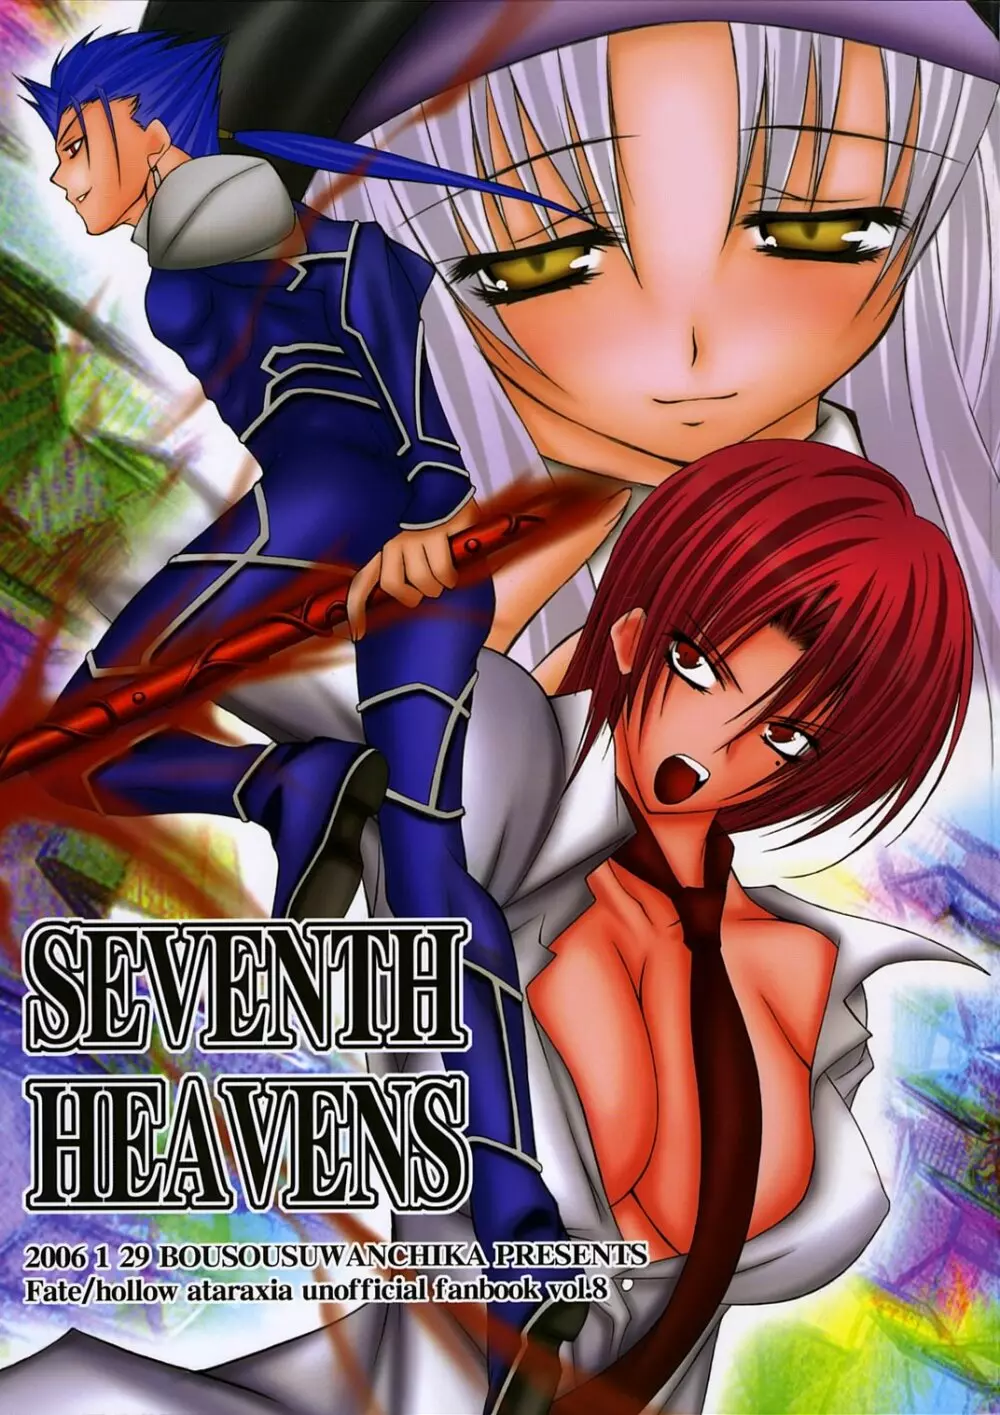 SEVENTH HEAVENS - page1